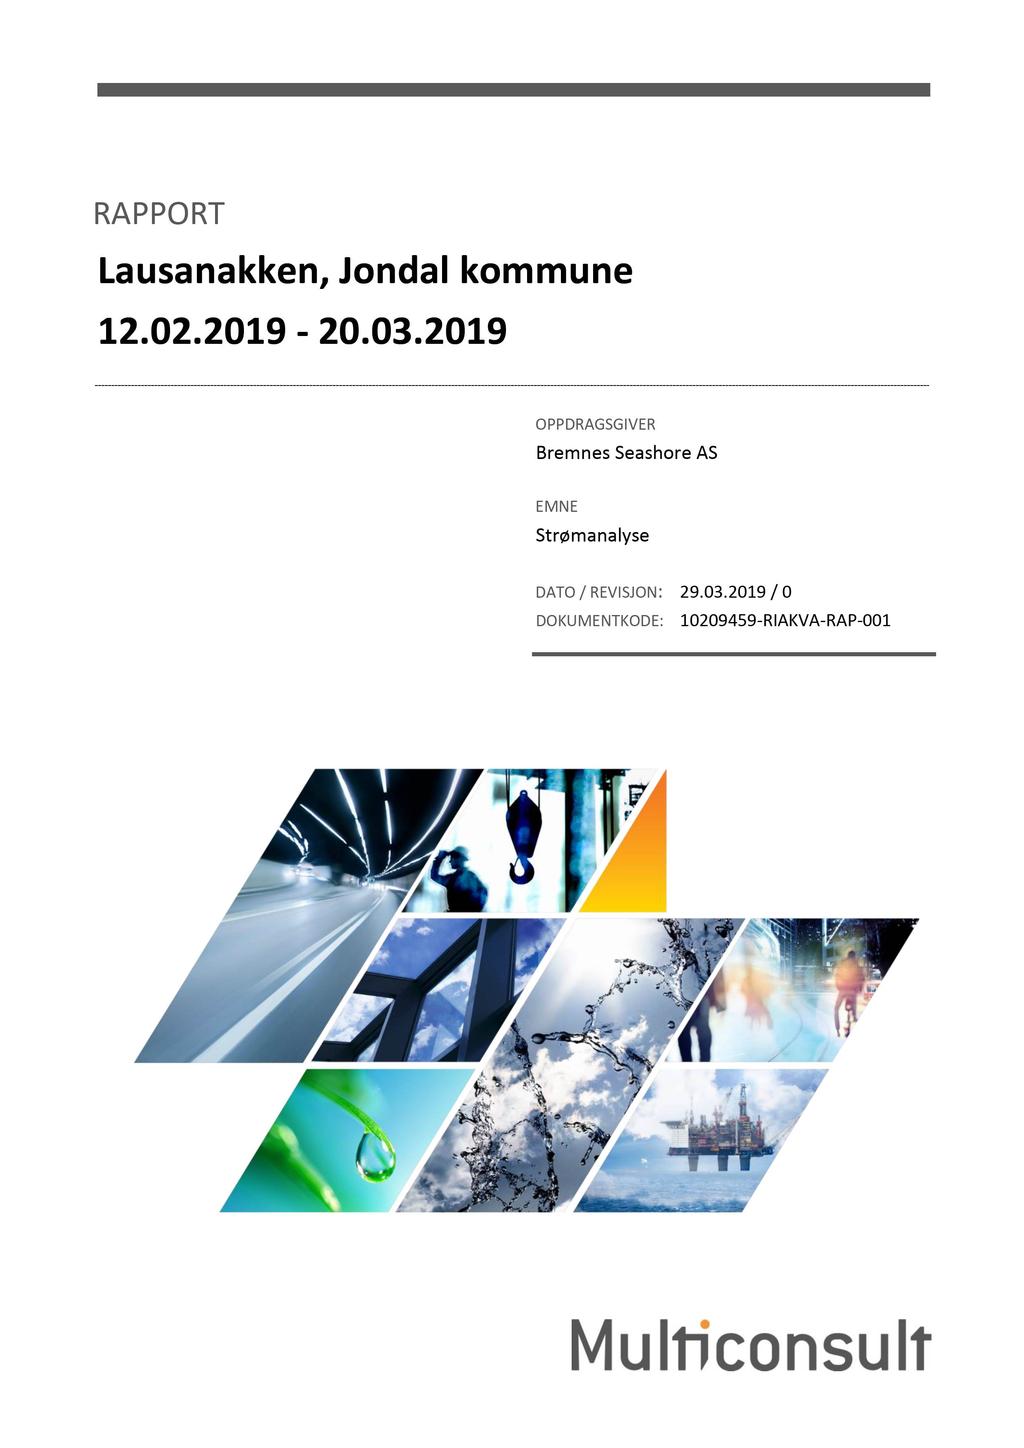 RAPPORT Lausanakken, Jondal kommune 12.02.2019-20.03.